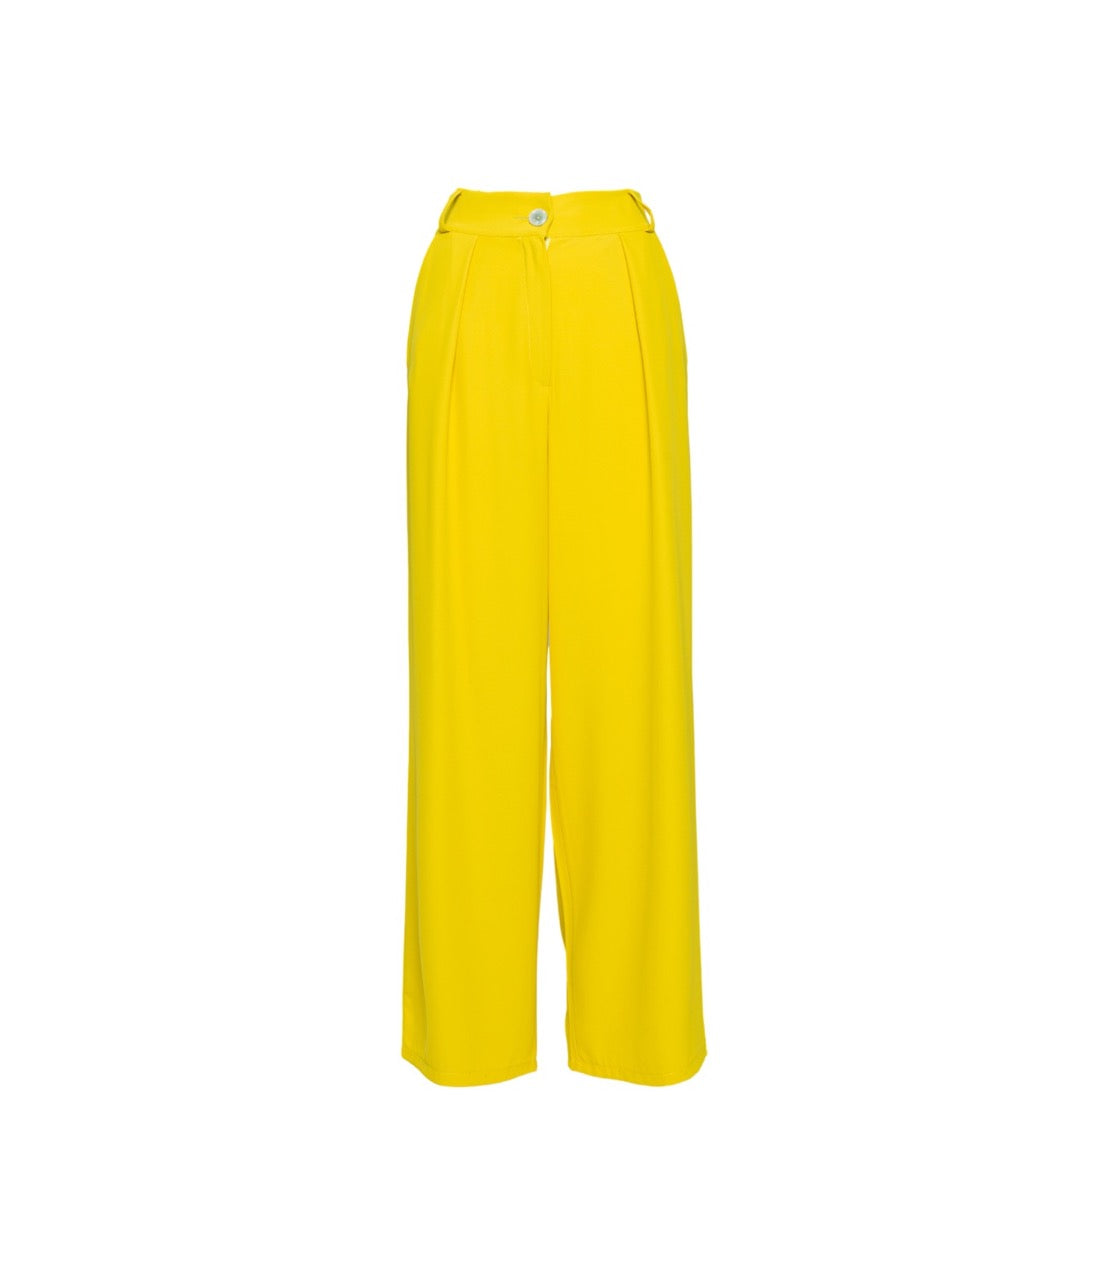 Saiph yellow pants